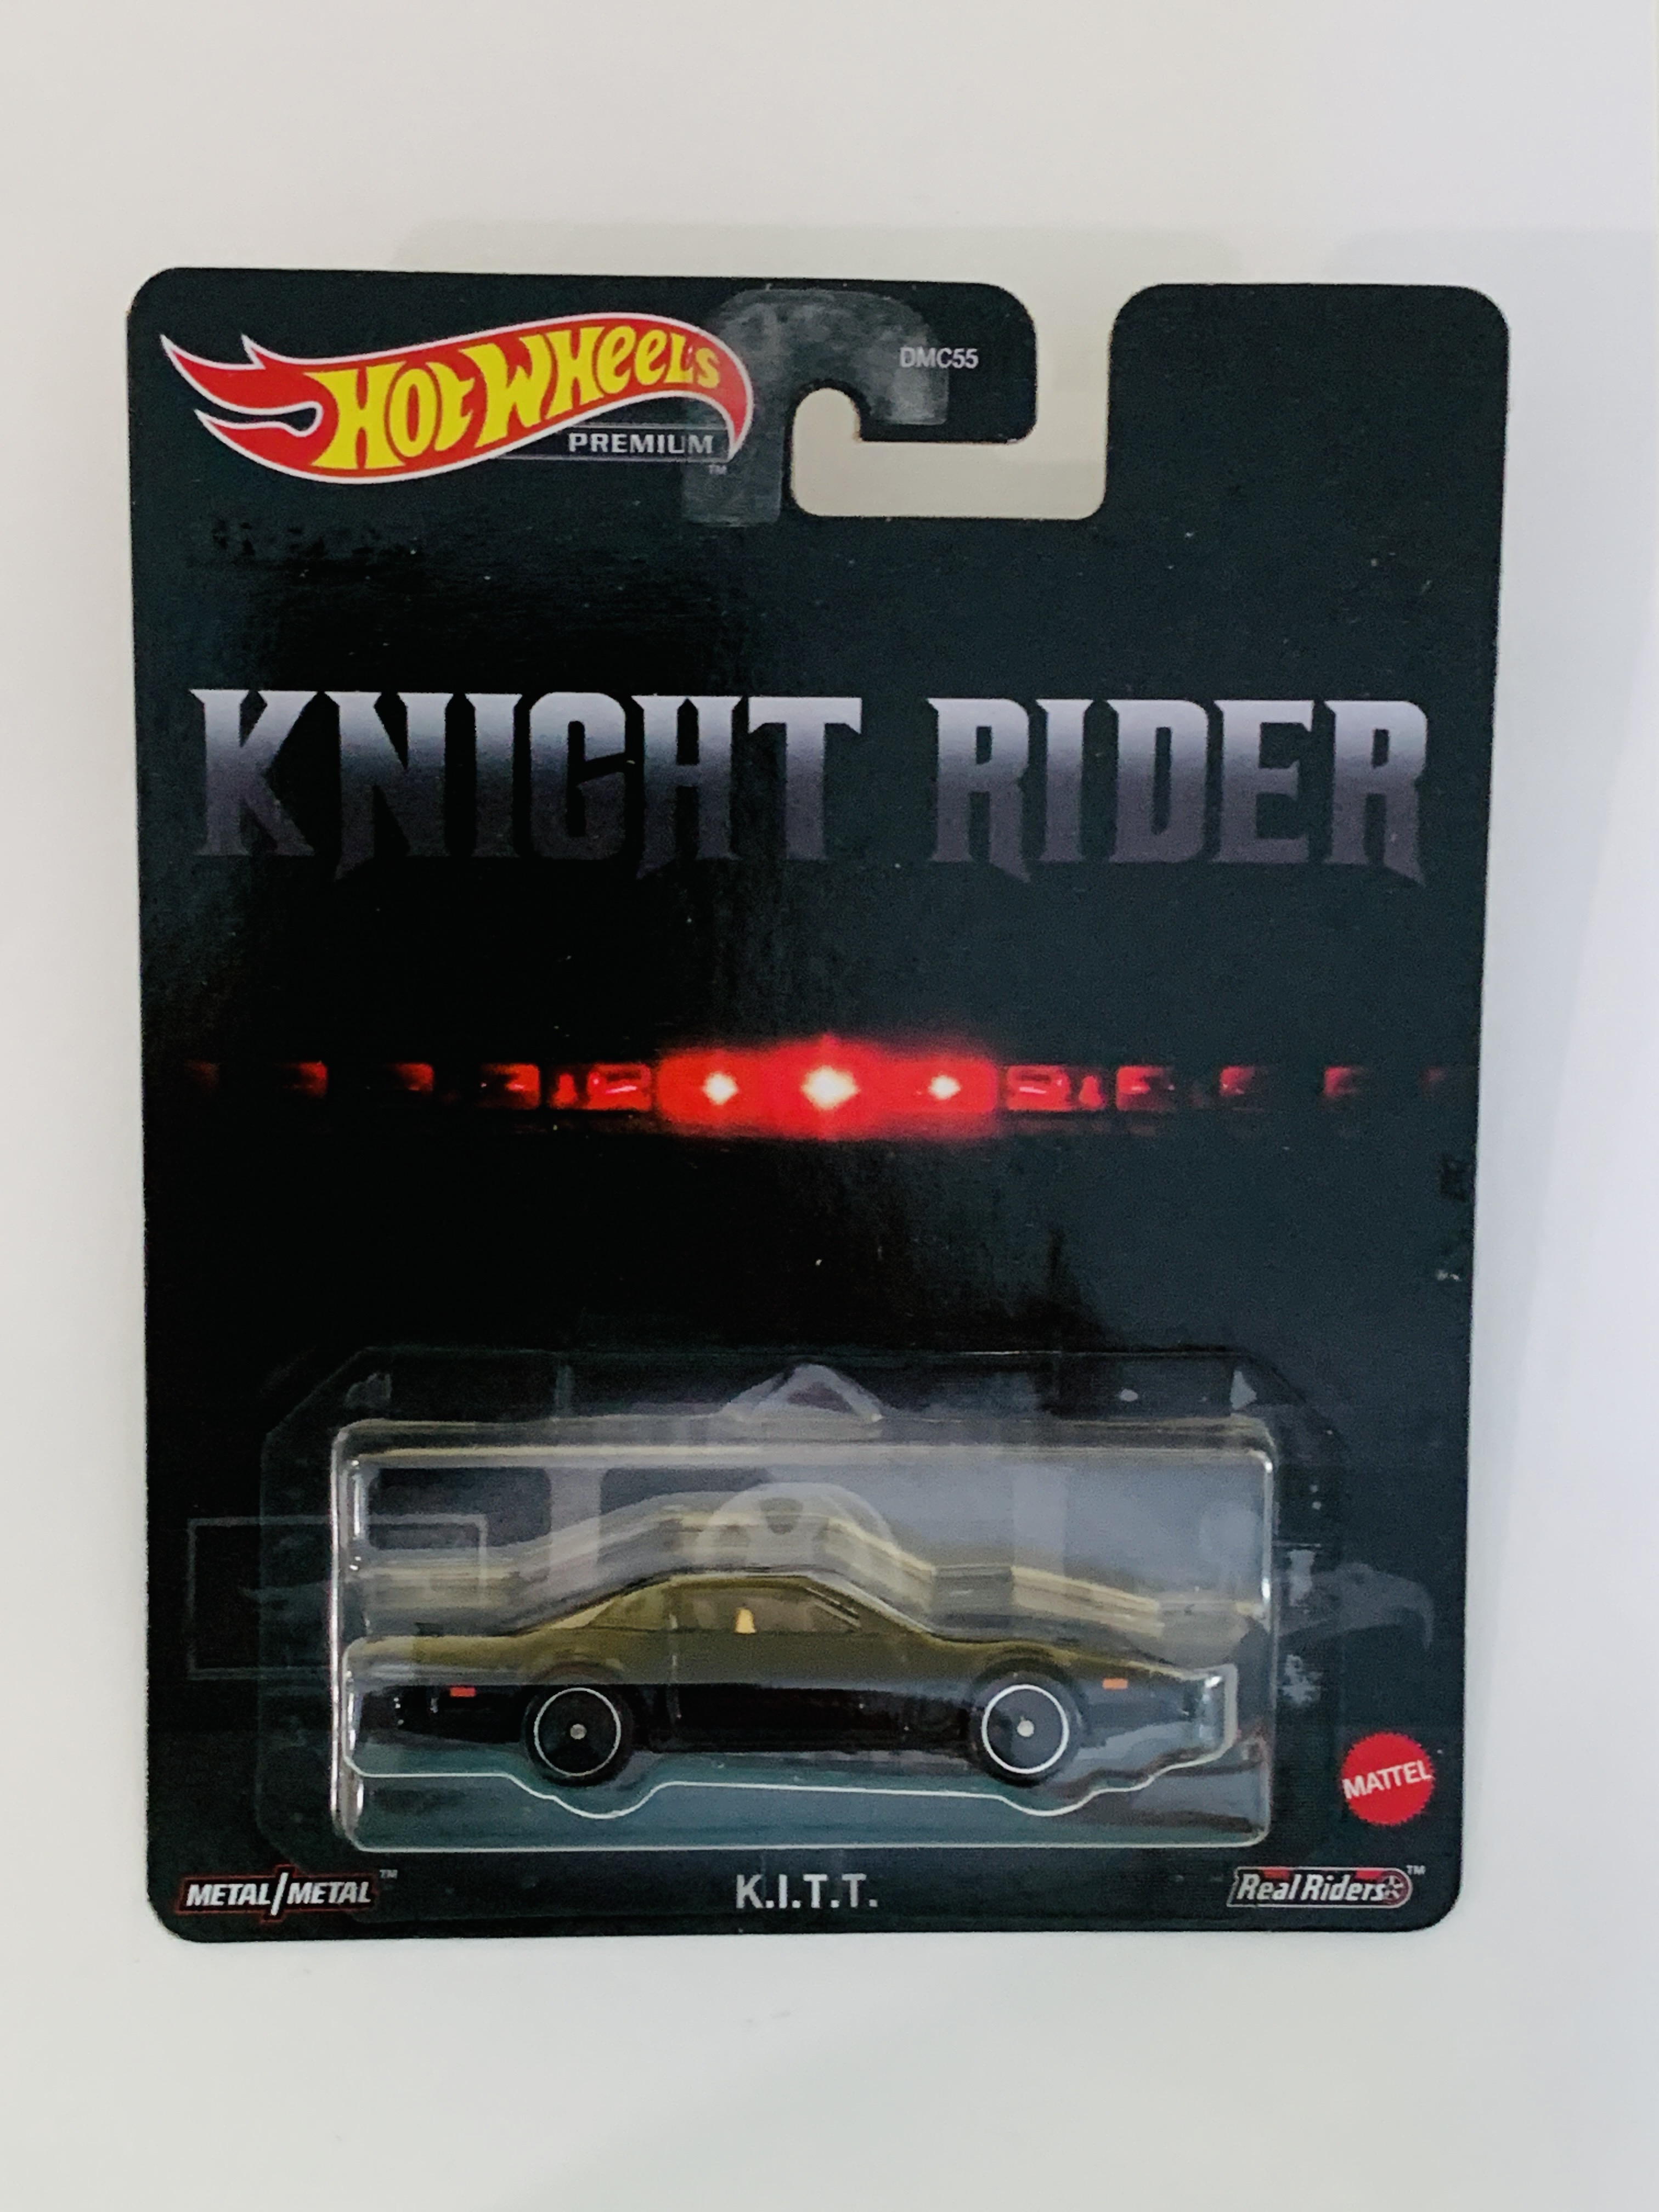 Hot Wheels Premium Knight Rider K.I.T.T.